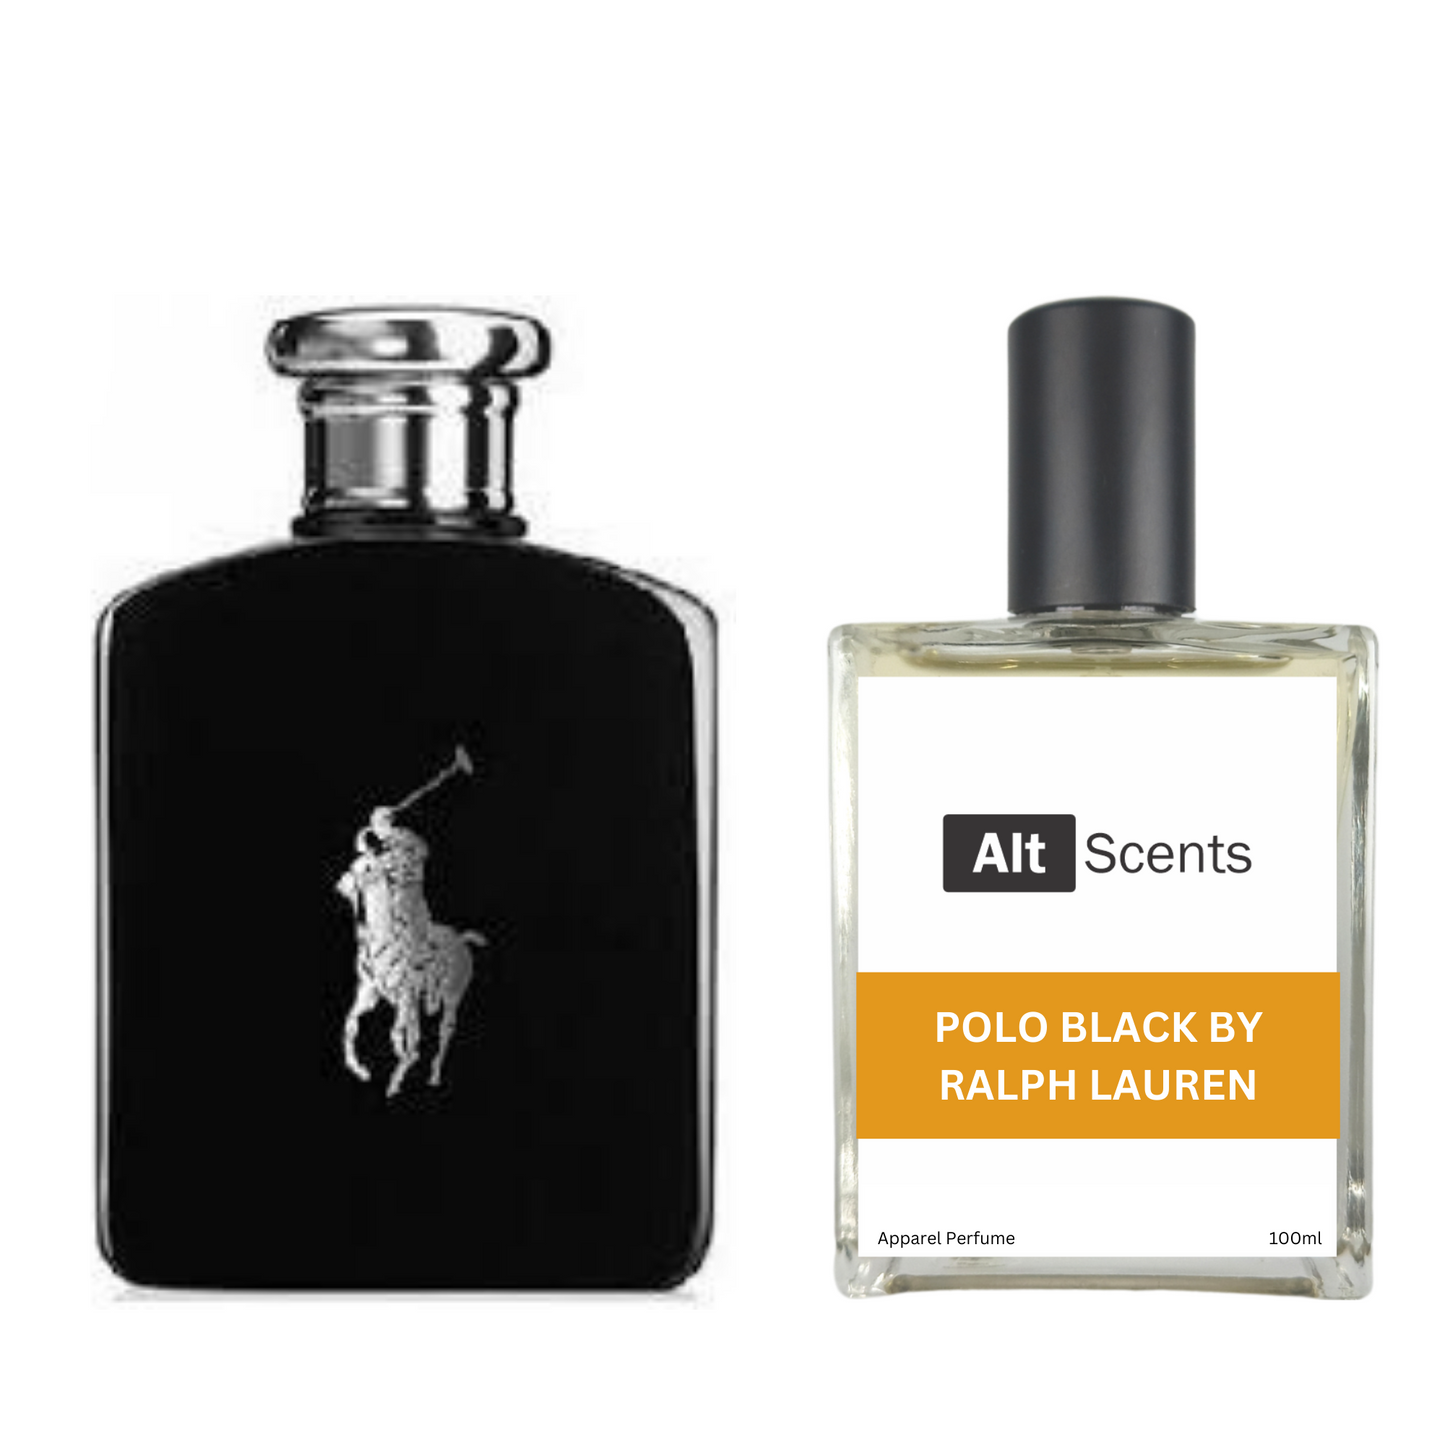 Polo Black by Ralph Lauren type Perfume for Men